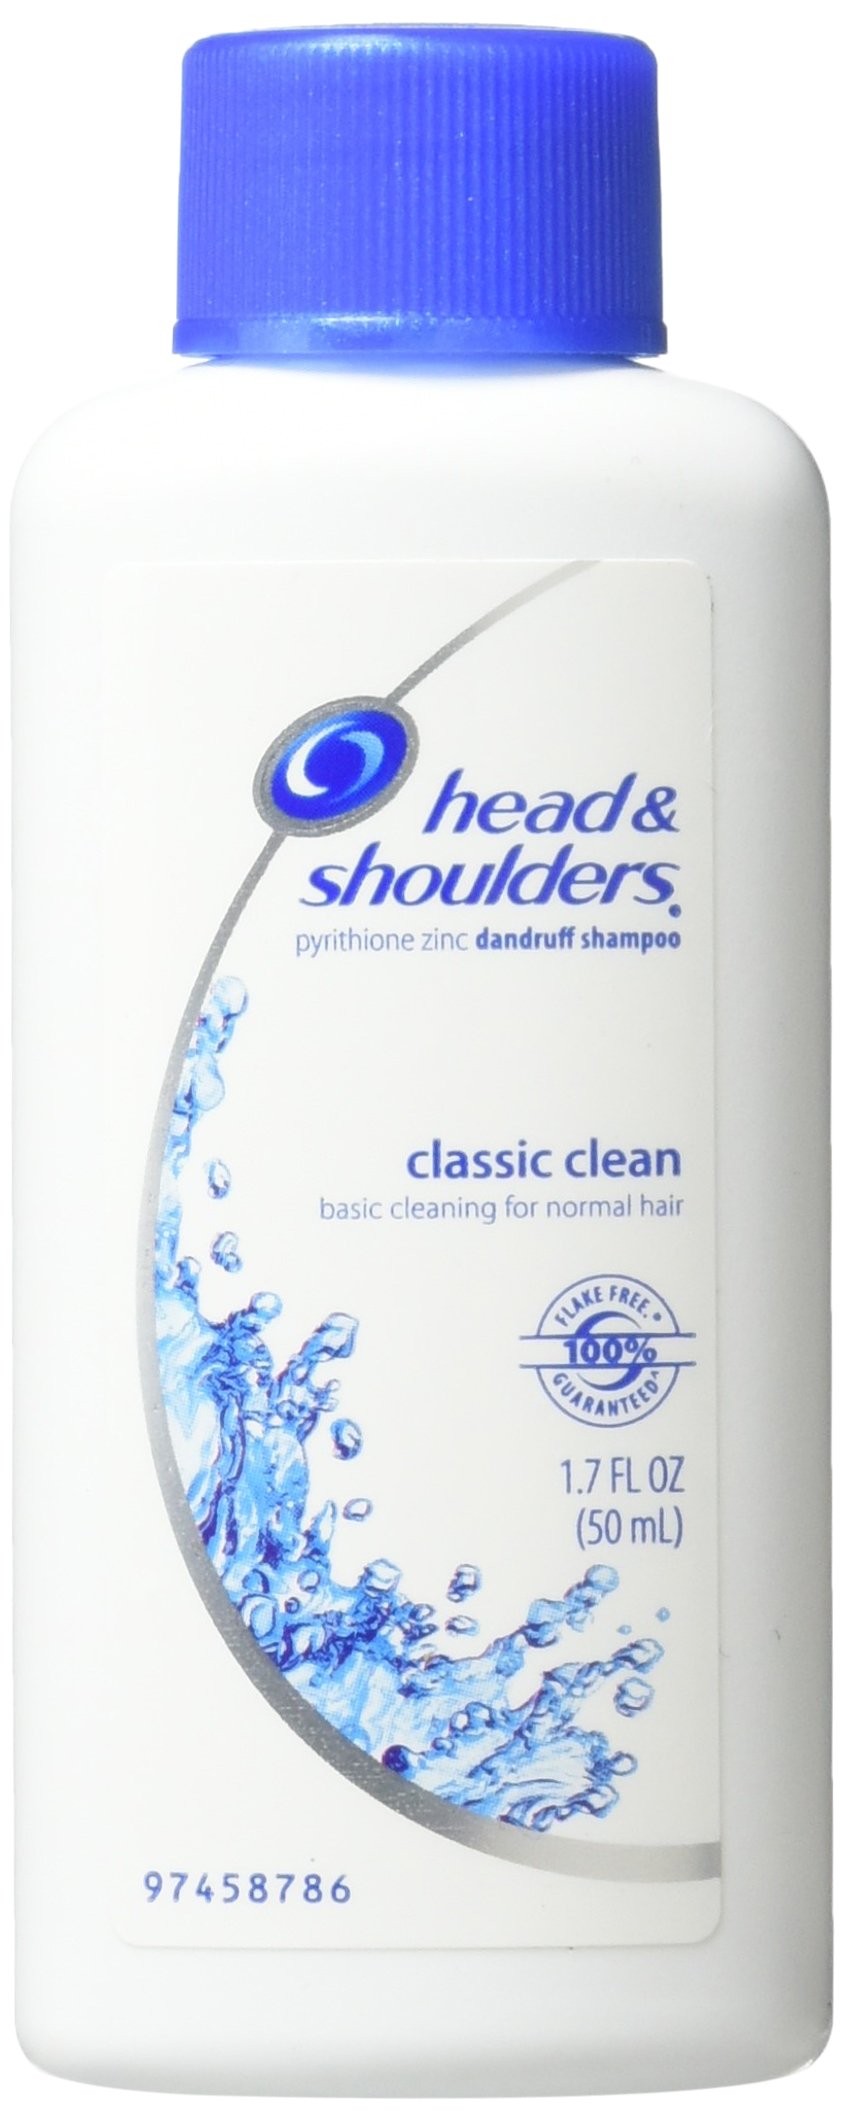 Head+shoulders Class Cln Size 1.7z Head & Shoulders Classic Clean Dandruff Shampoo (Pack of 3)